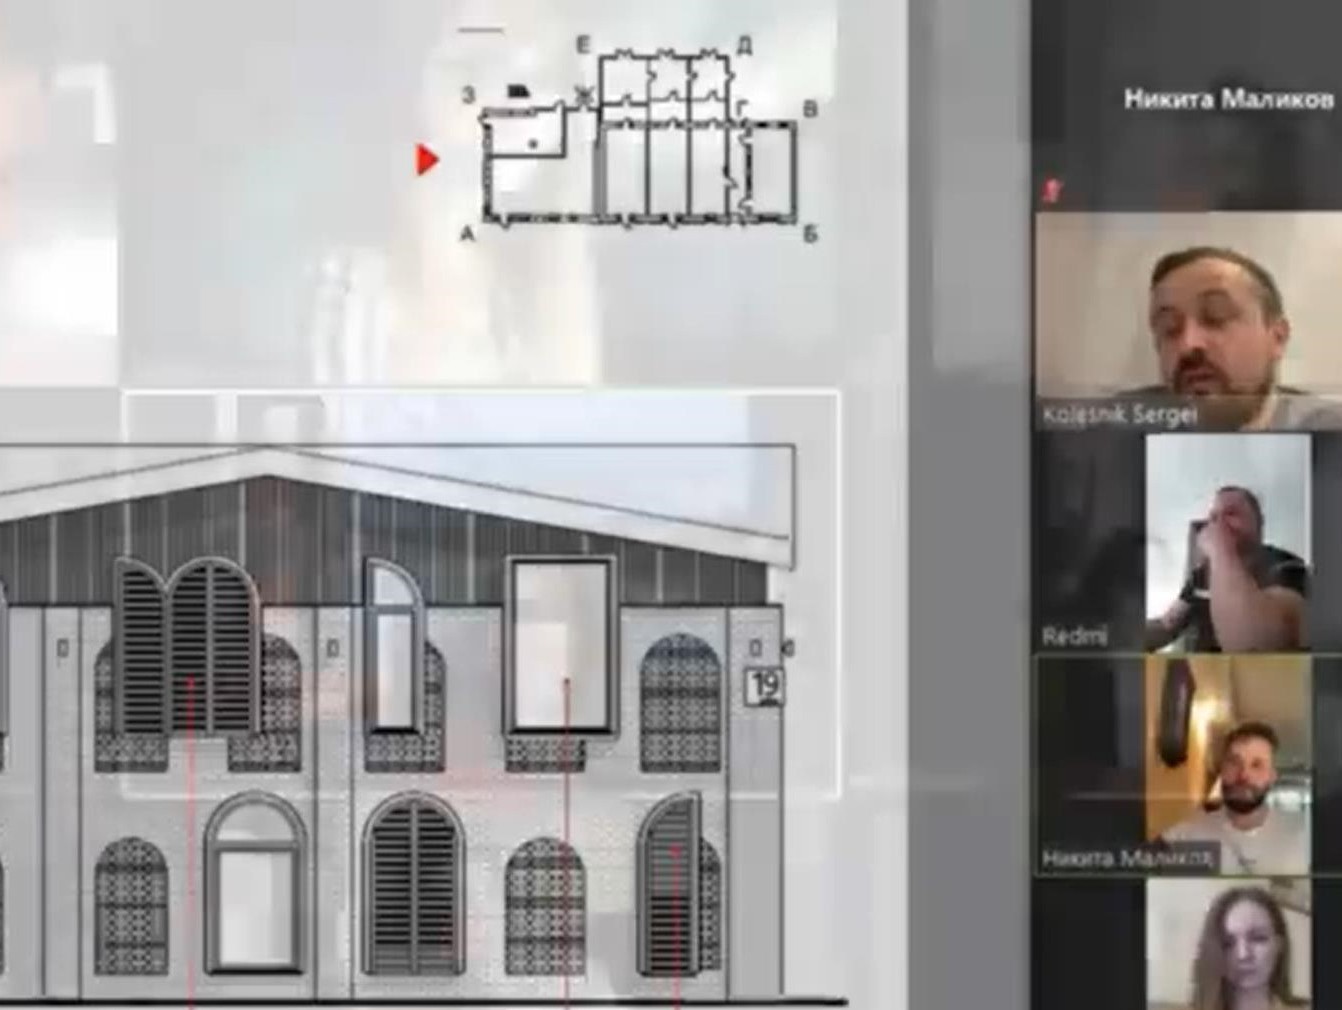 стоп-кадр видео-эссе Архитектурного бюро Маликова